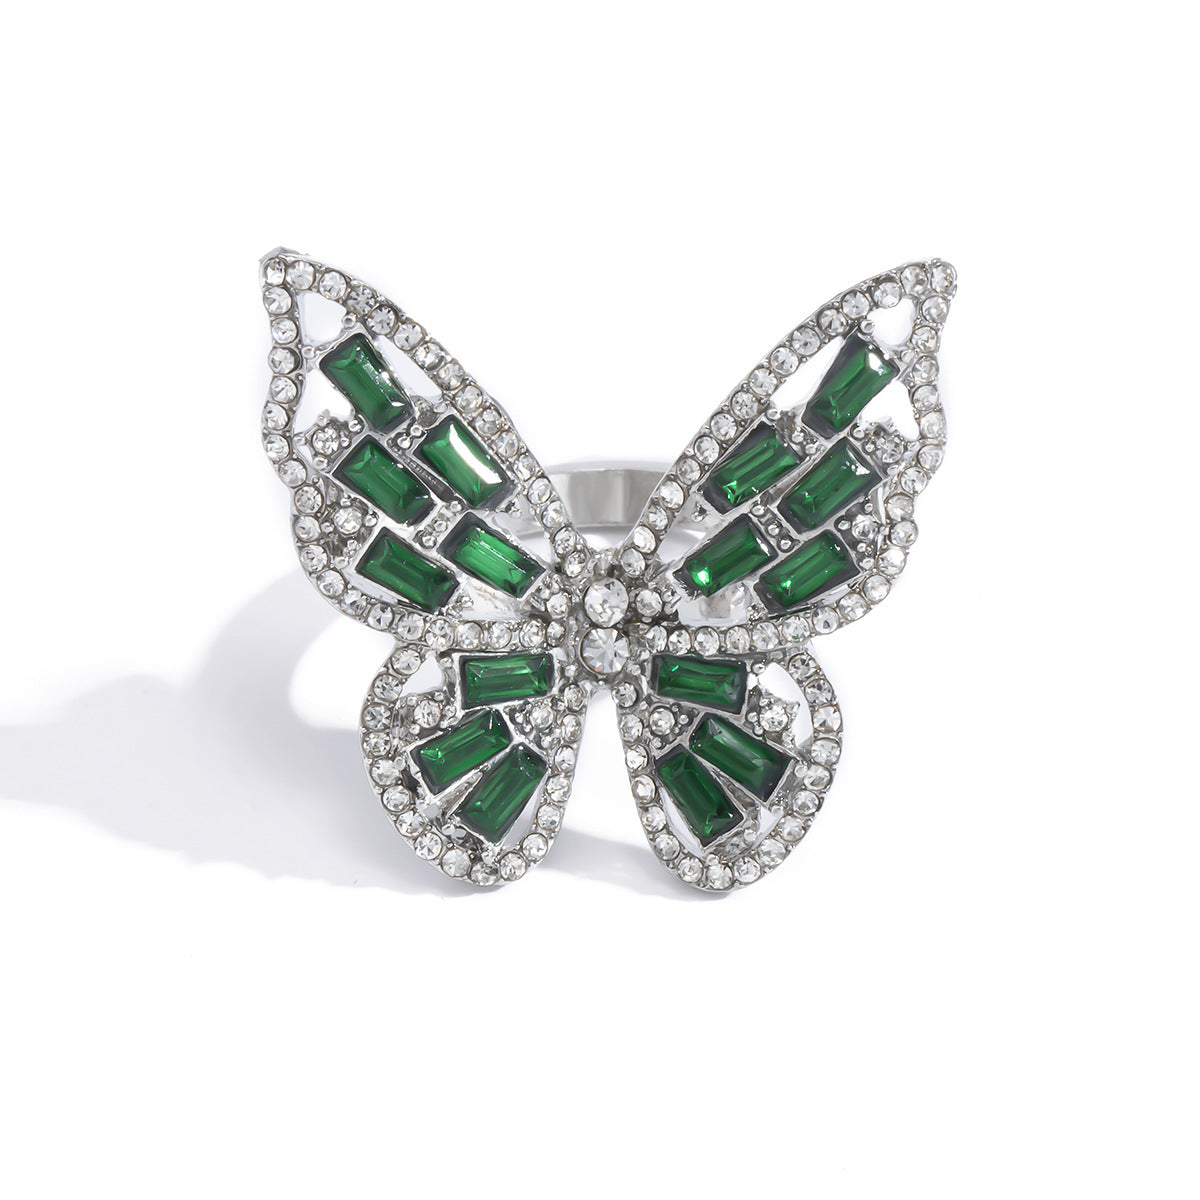 Diamond-studded Simple Temperament Jewelry